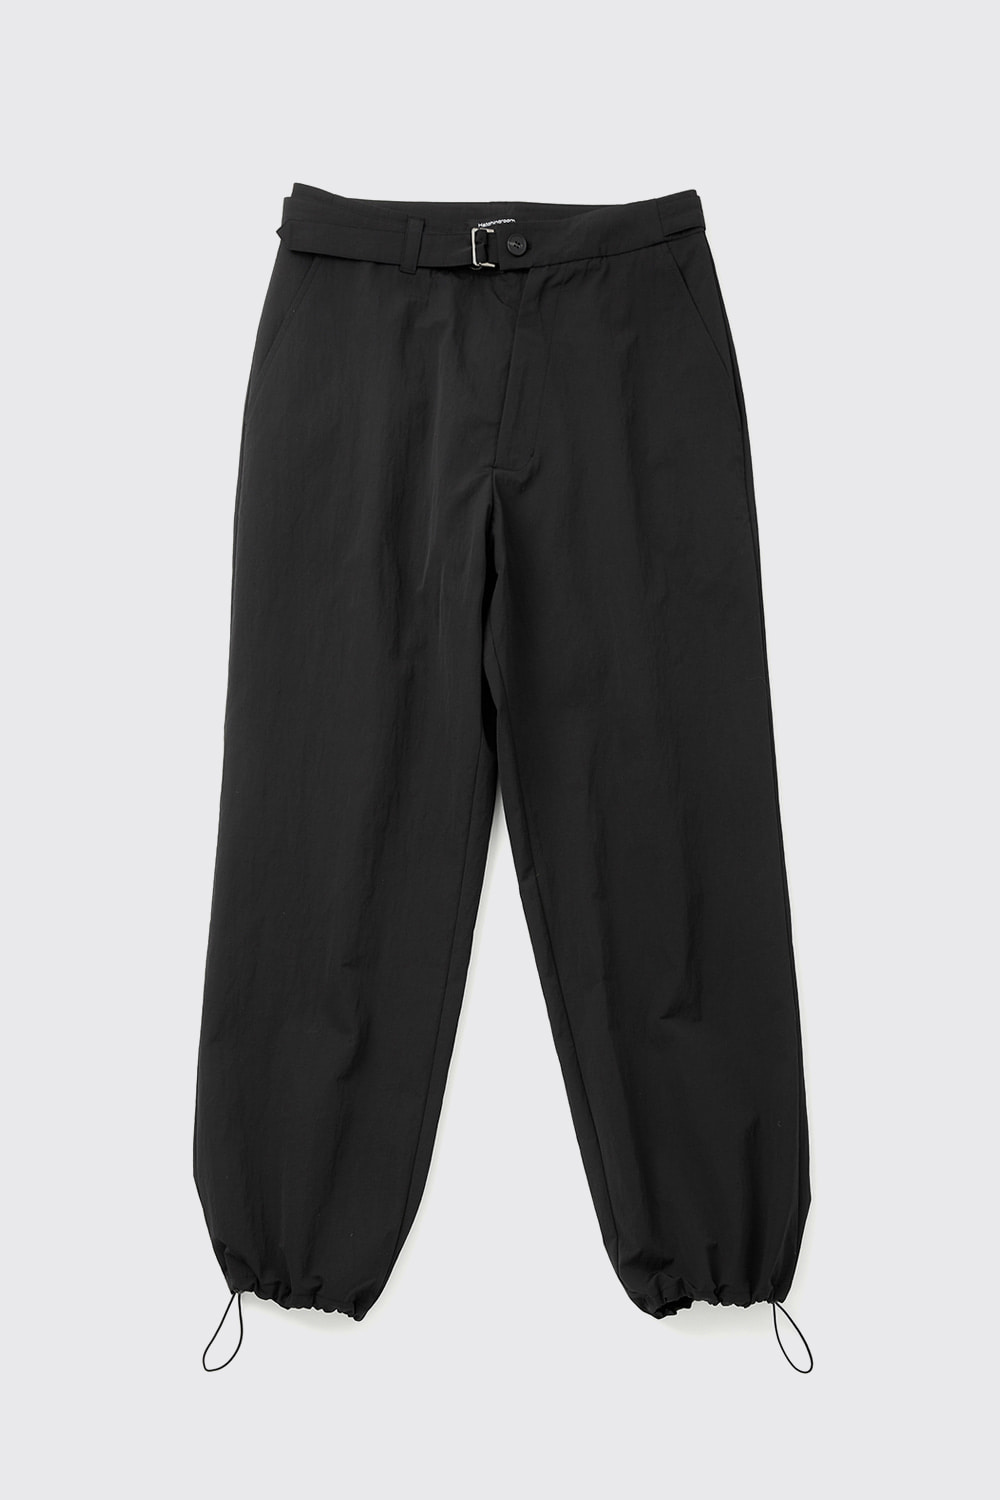 Asymmetric Belted Pants Black